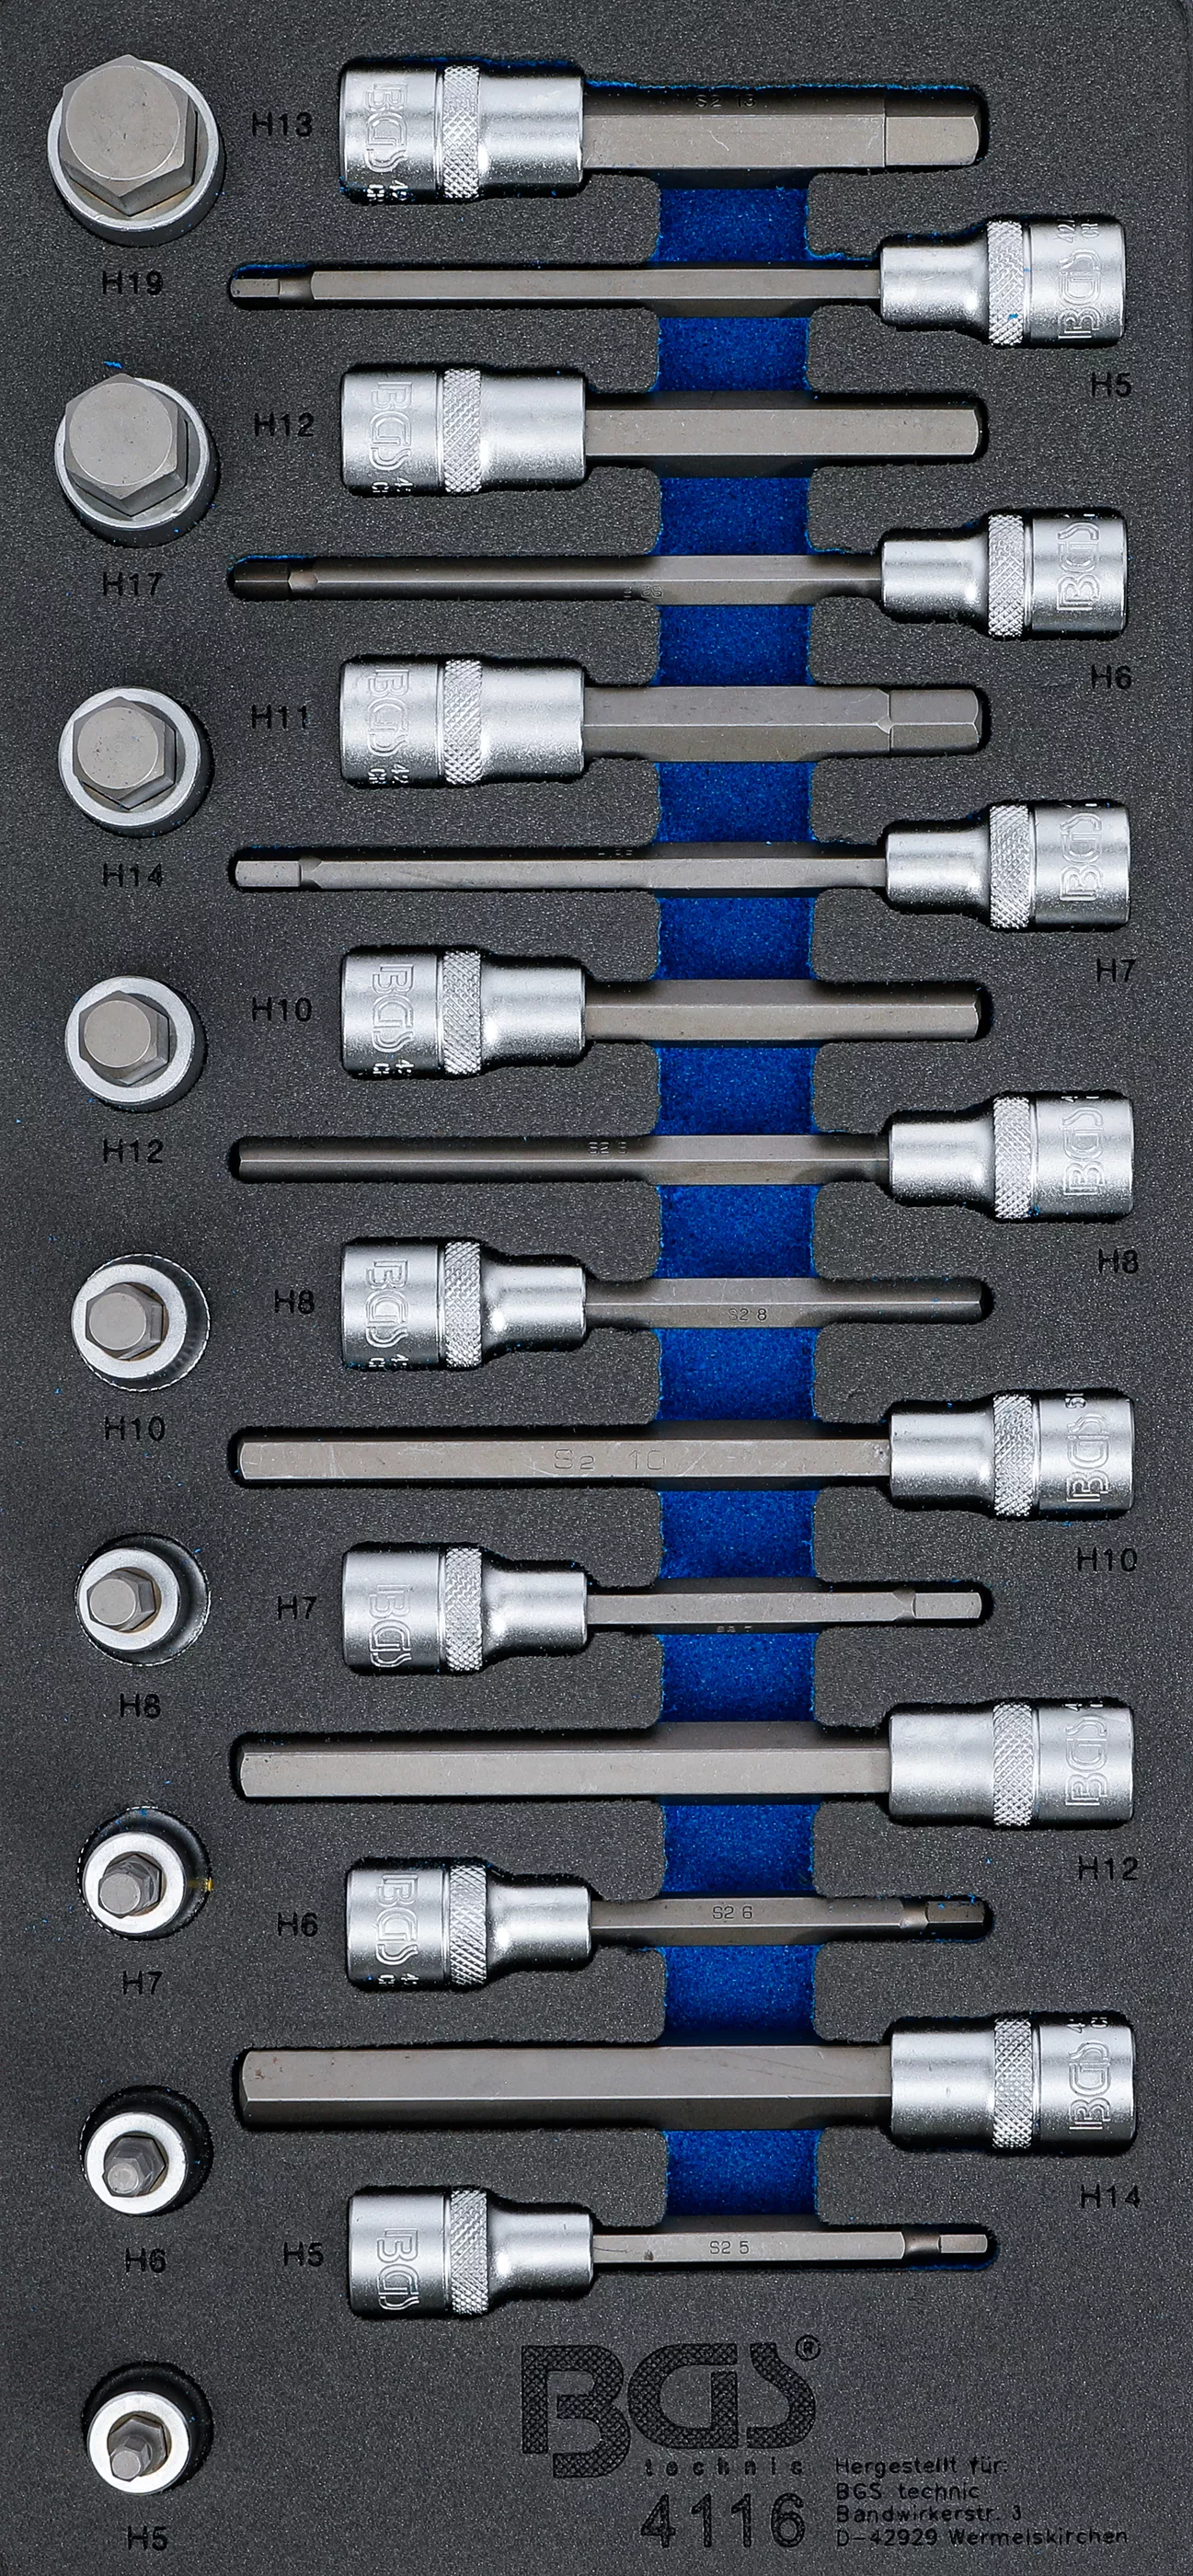 Sada nástrčných klíčů v pěnové výplni, Imbus, 1/2", 24 ks - B4116